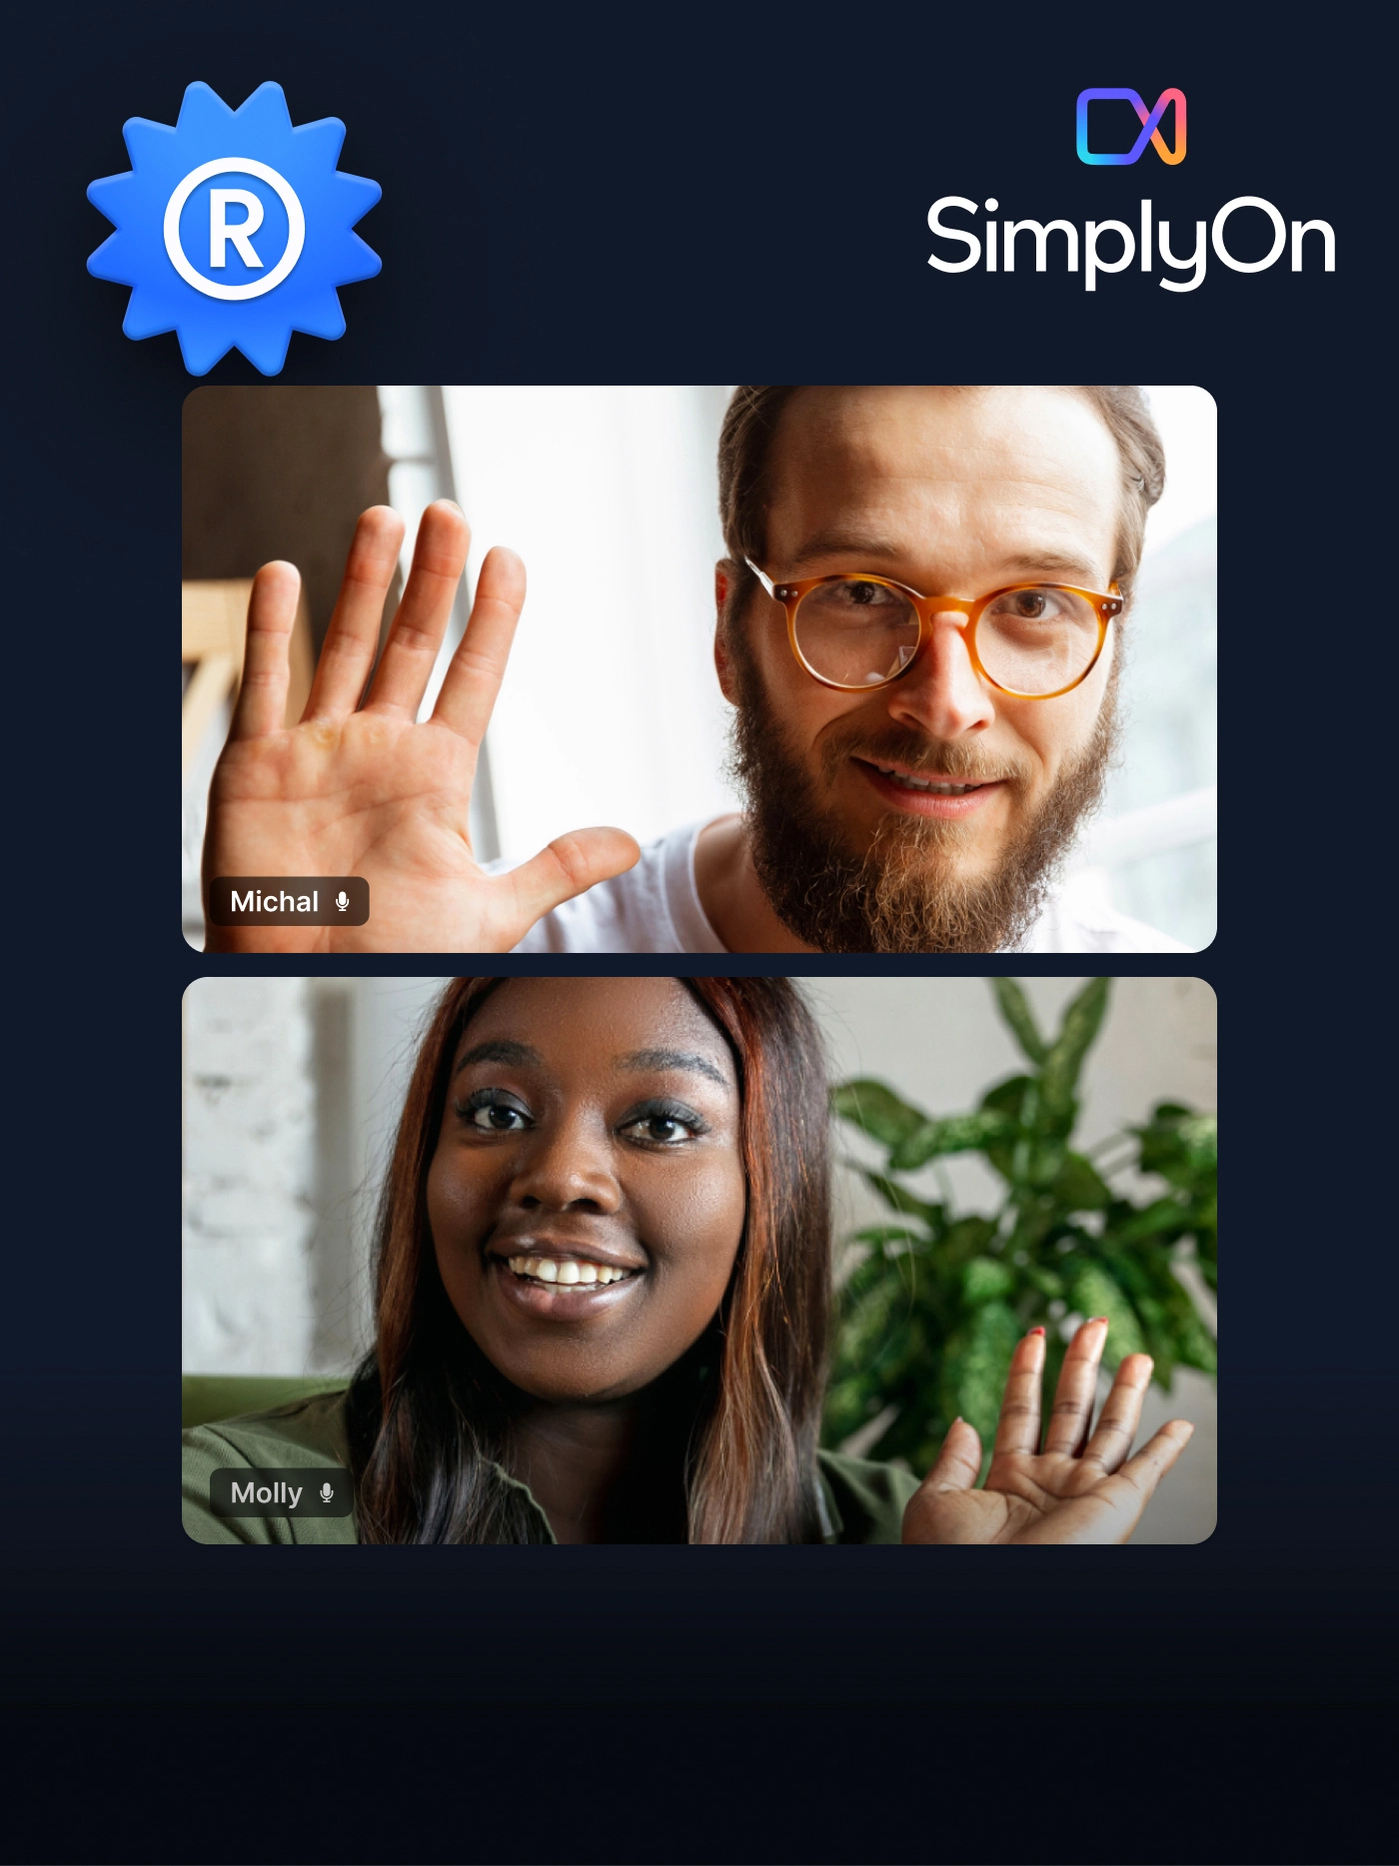 simplyon-video-call-branding-bg-image-portrait-large